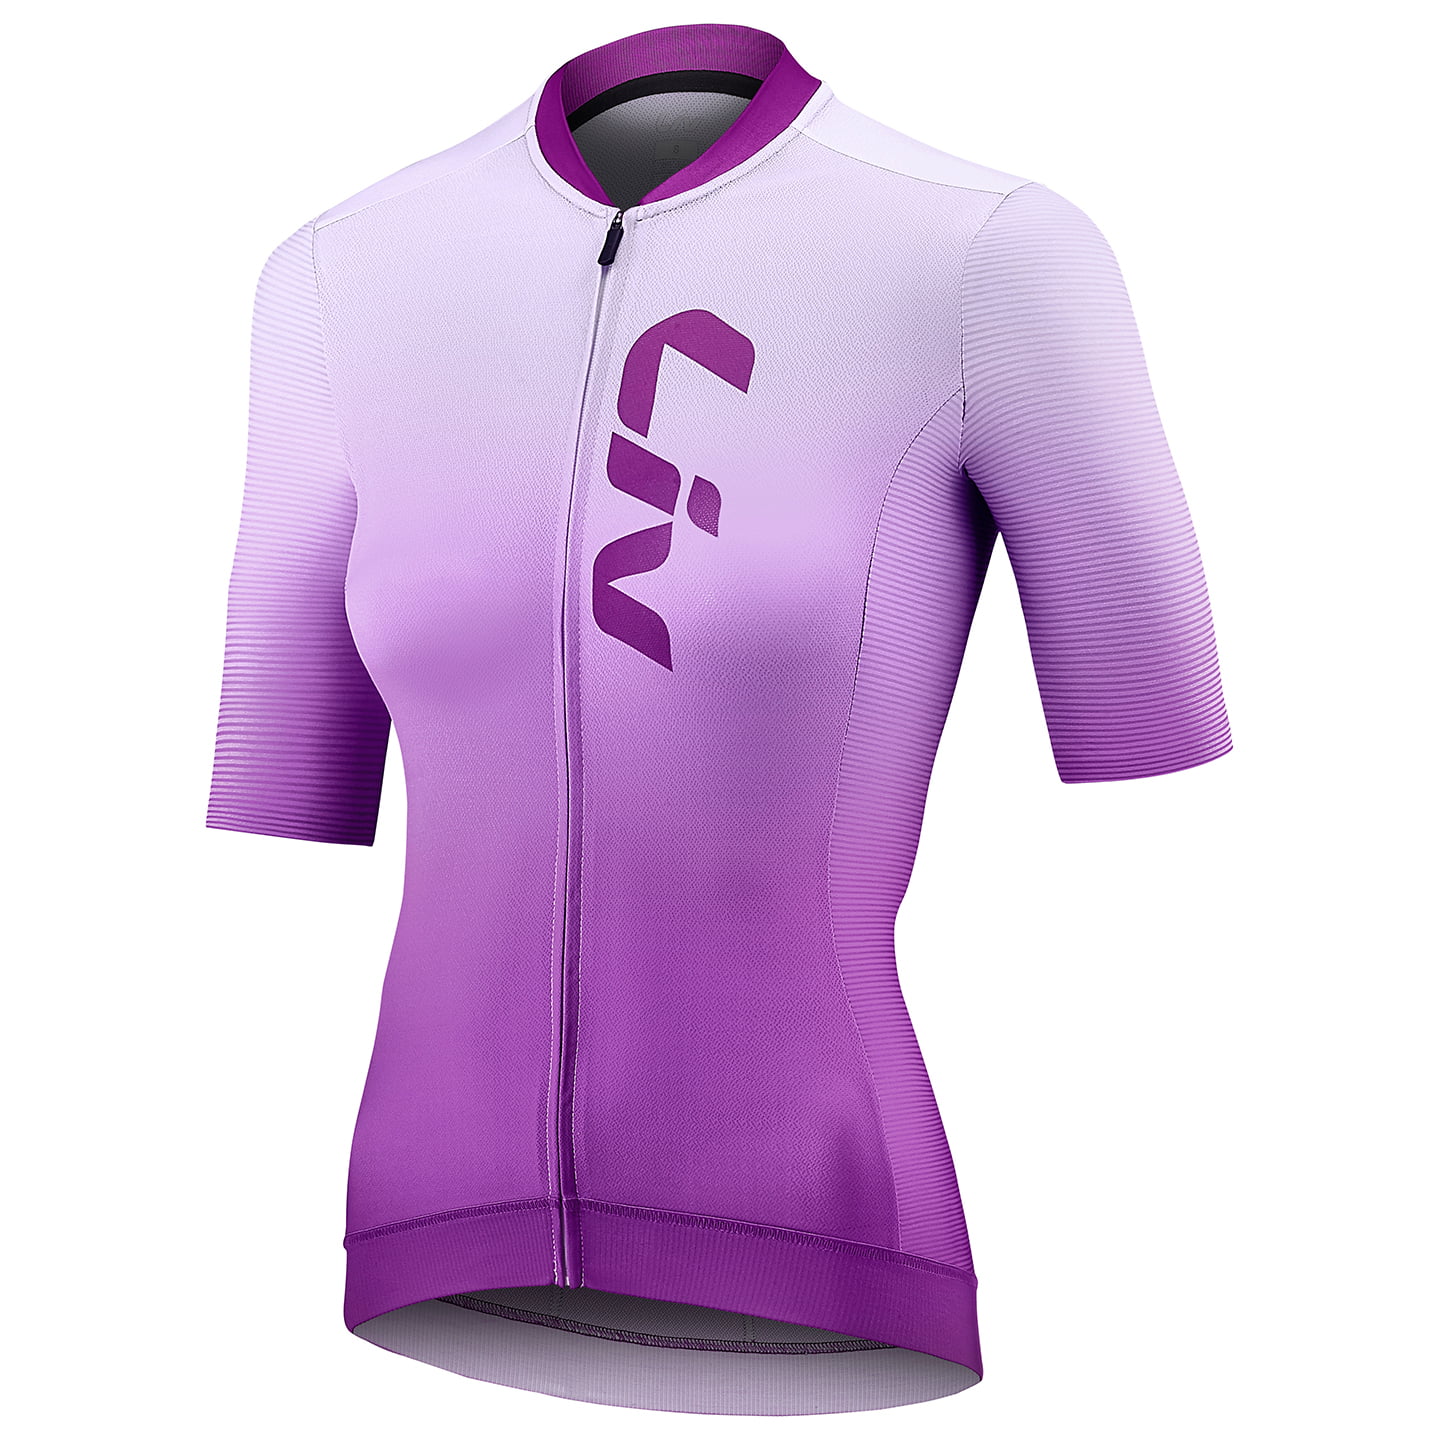 LIV Race Day Women’s Short Sleeve Jersey Women’s Short Sleeve Jersey, size L, Cycling jersey, Cycling clothing